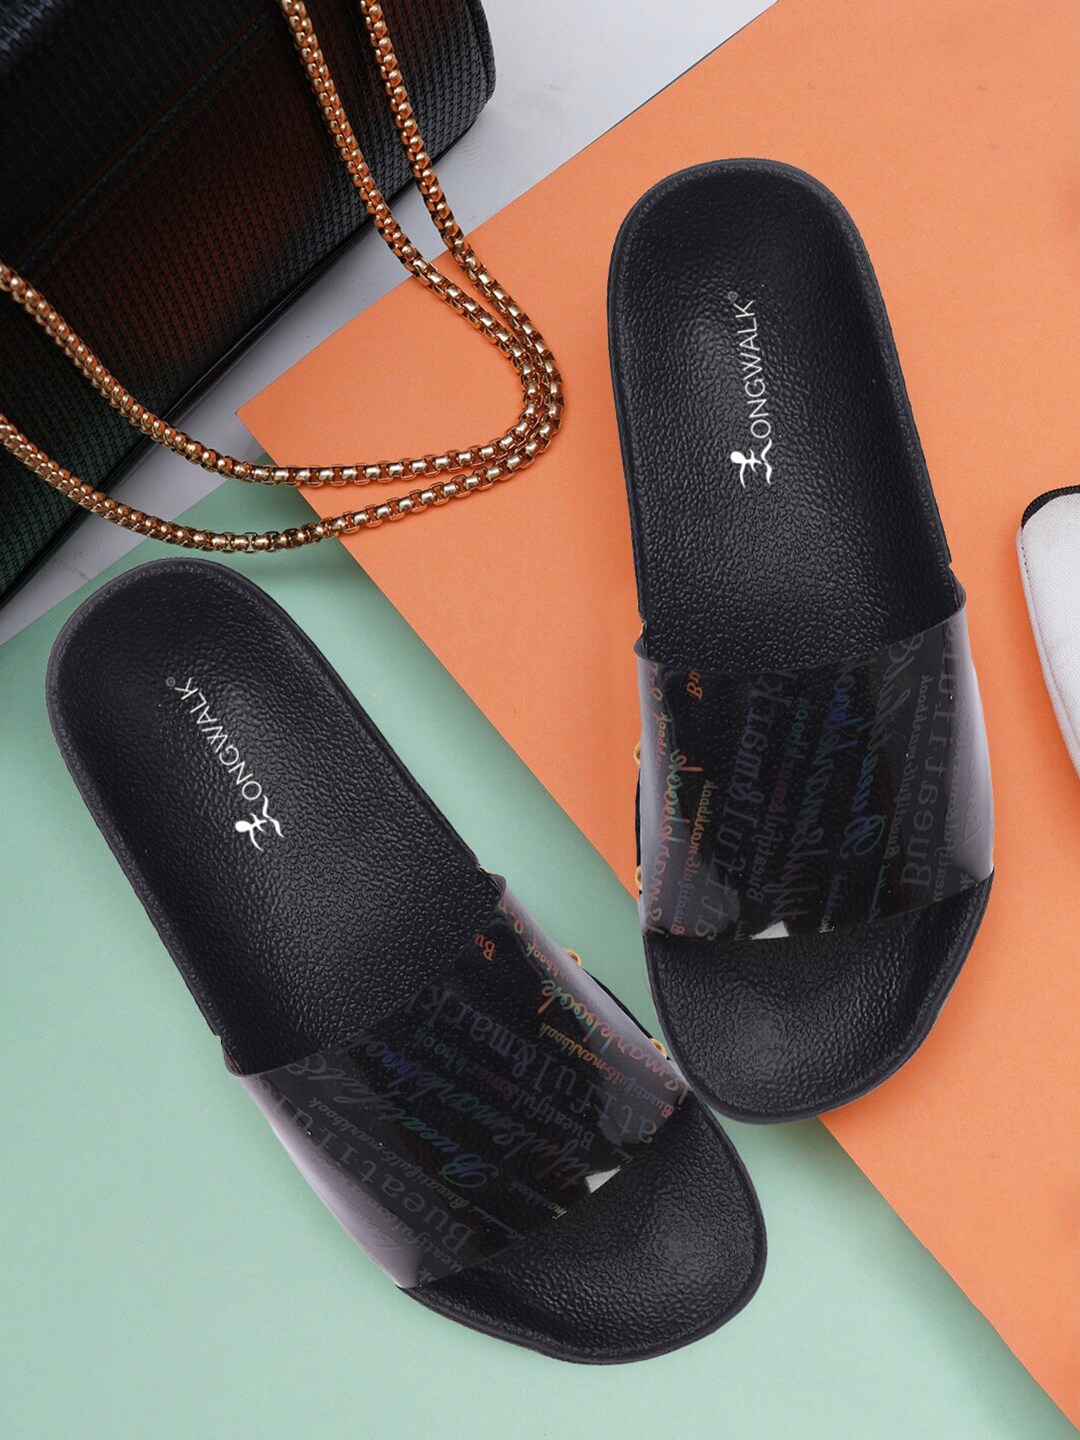 Longwalk Black & Transparent Printed Flatform Sandals Price in India